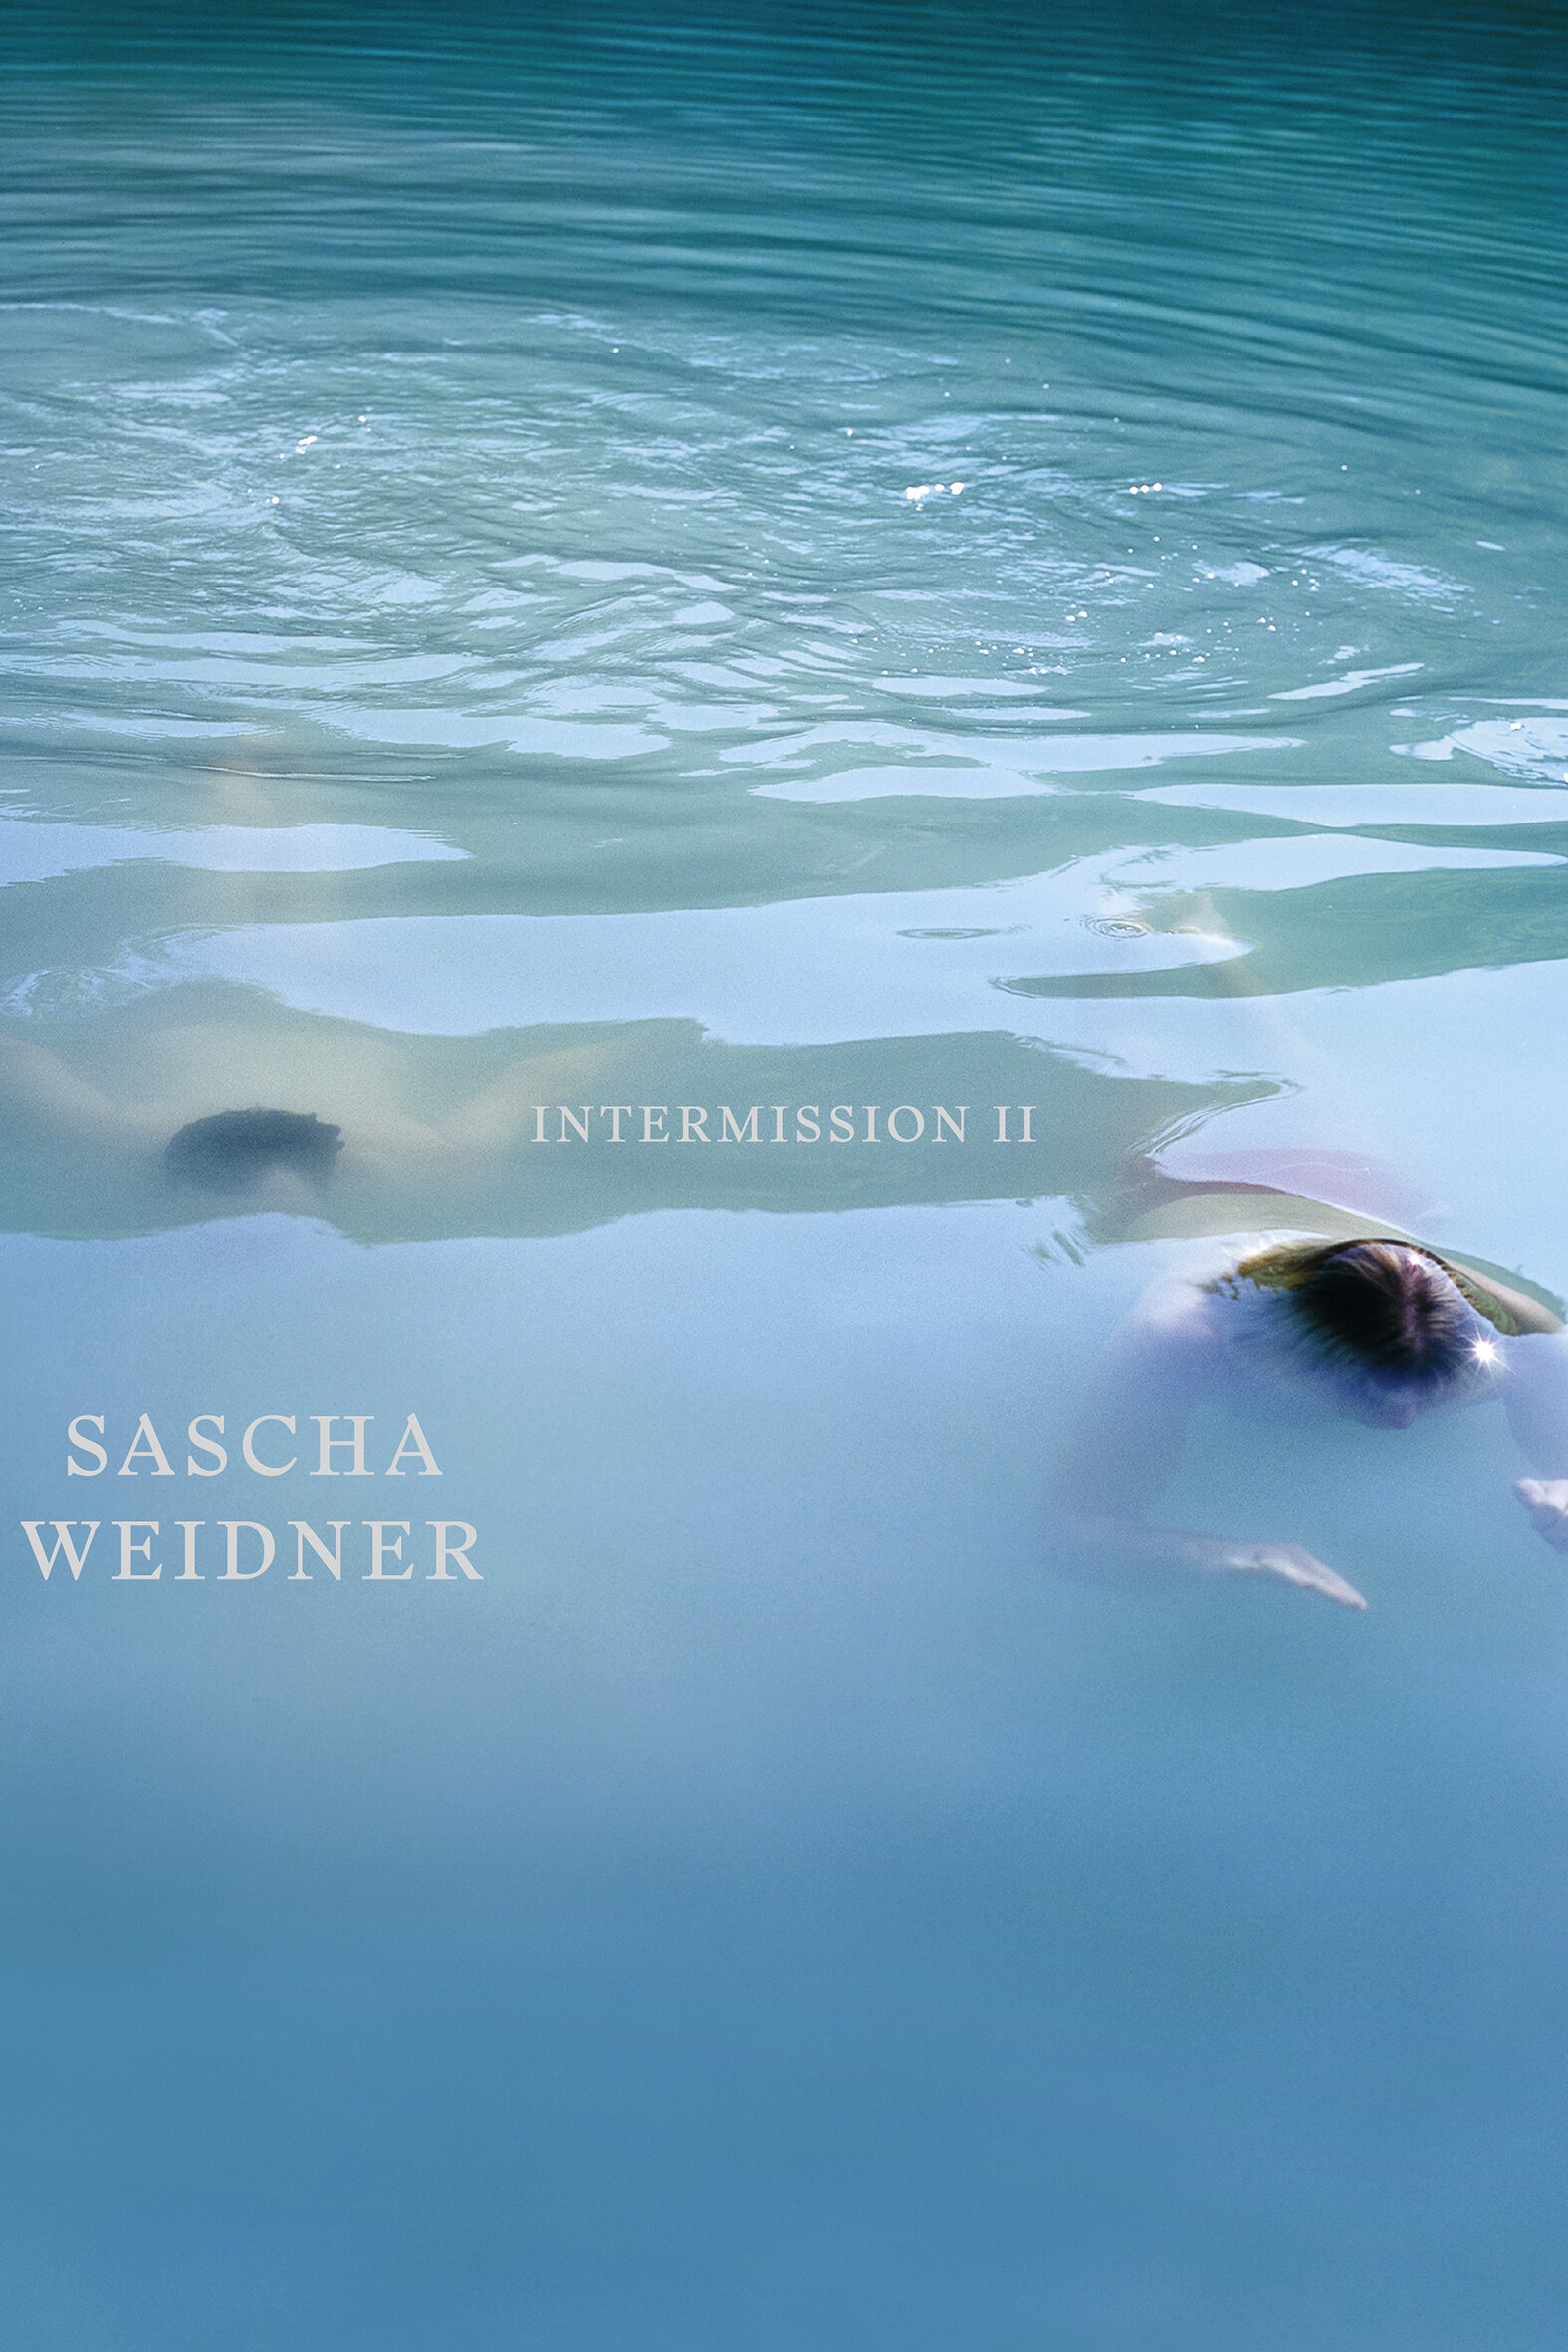 sascha weidner intermission II, inka schube, kunstbuch bildband fotobuch